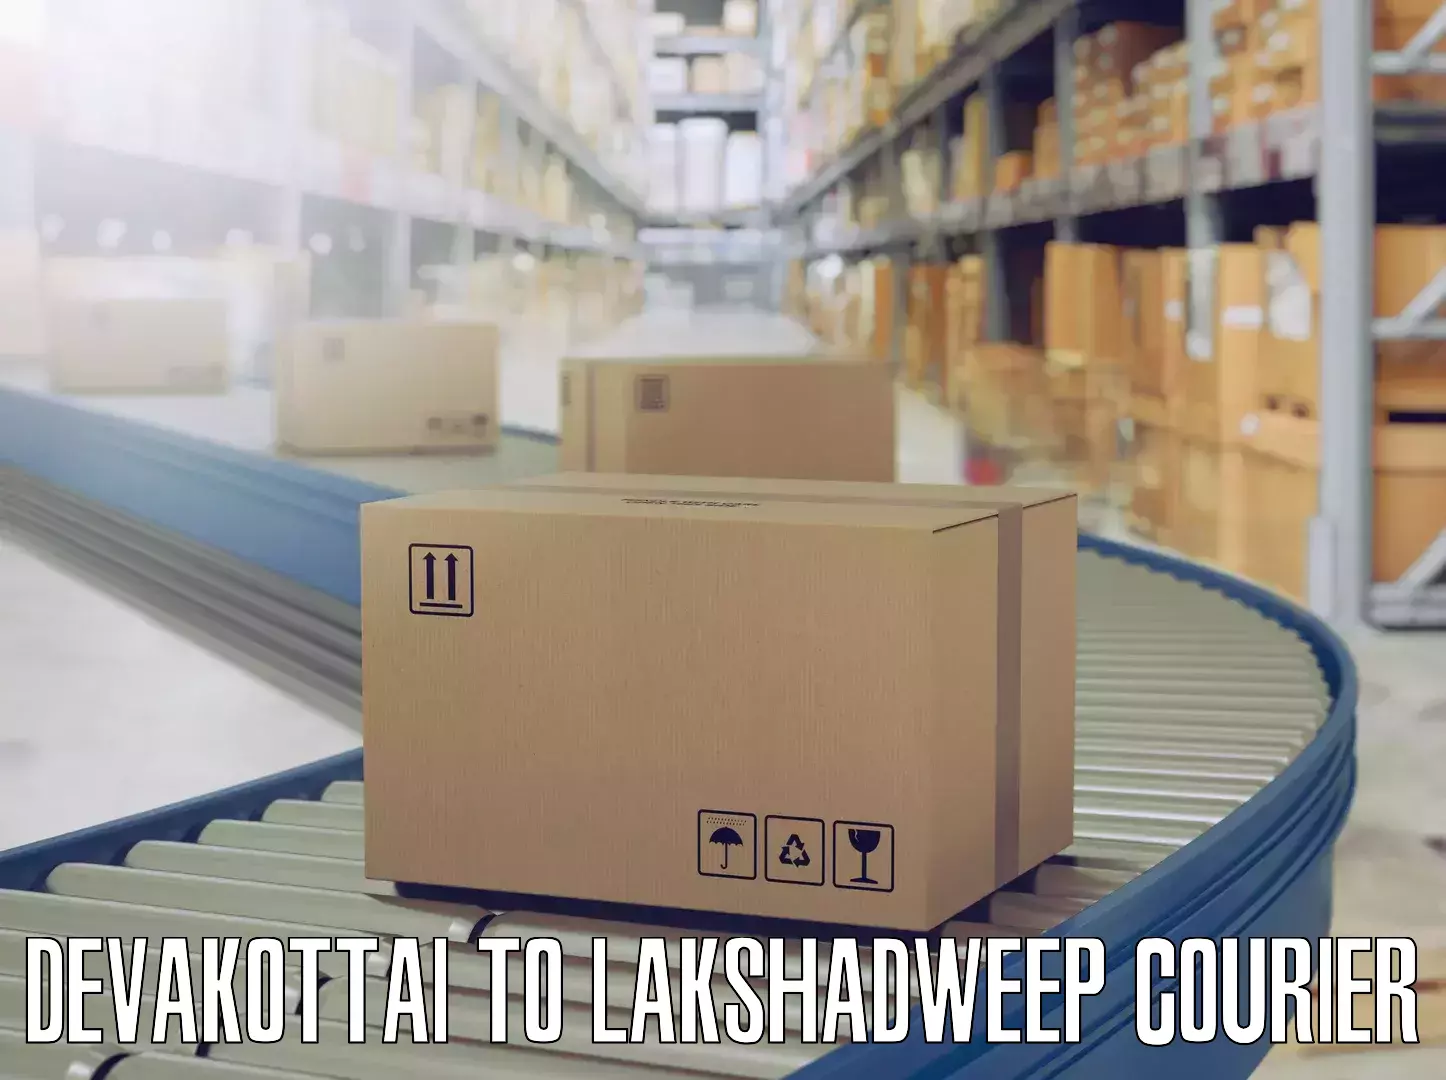 Furniture delivery service Devakottai to Lakshadweep